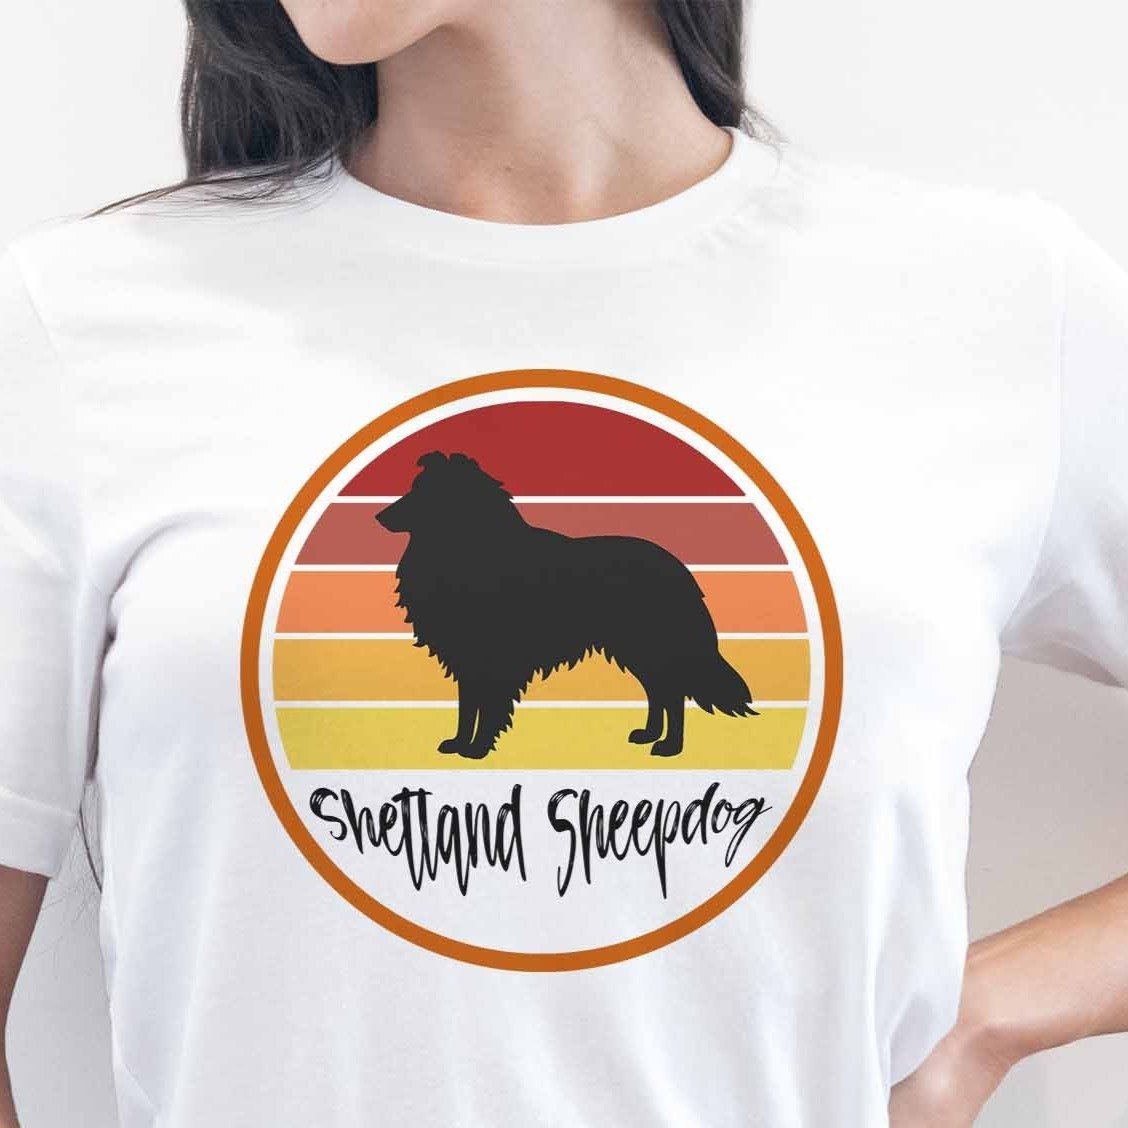 Shetland Sheepdog - My Custom Tee Party